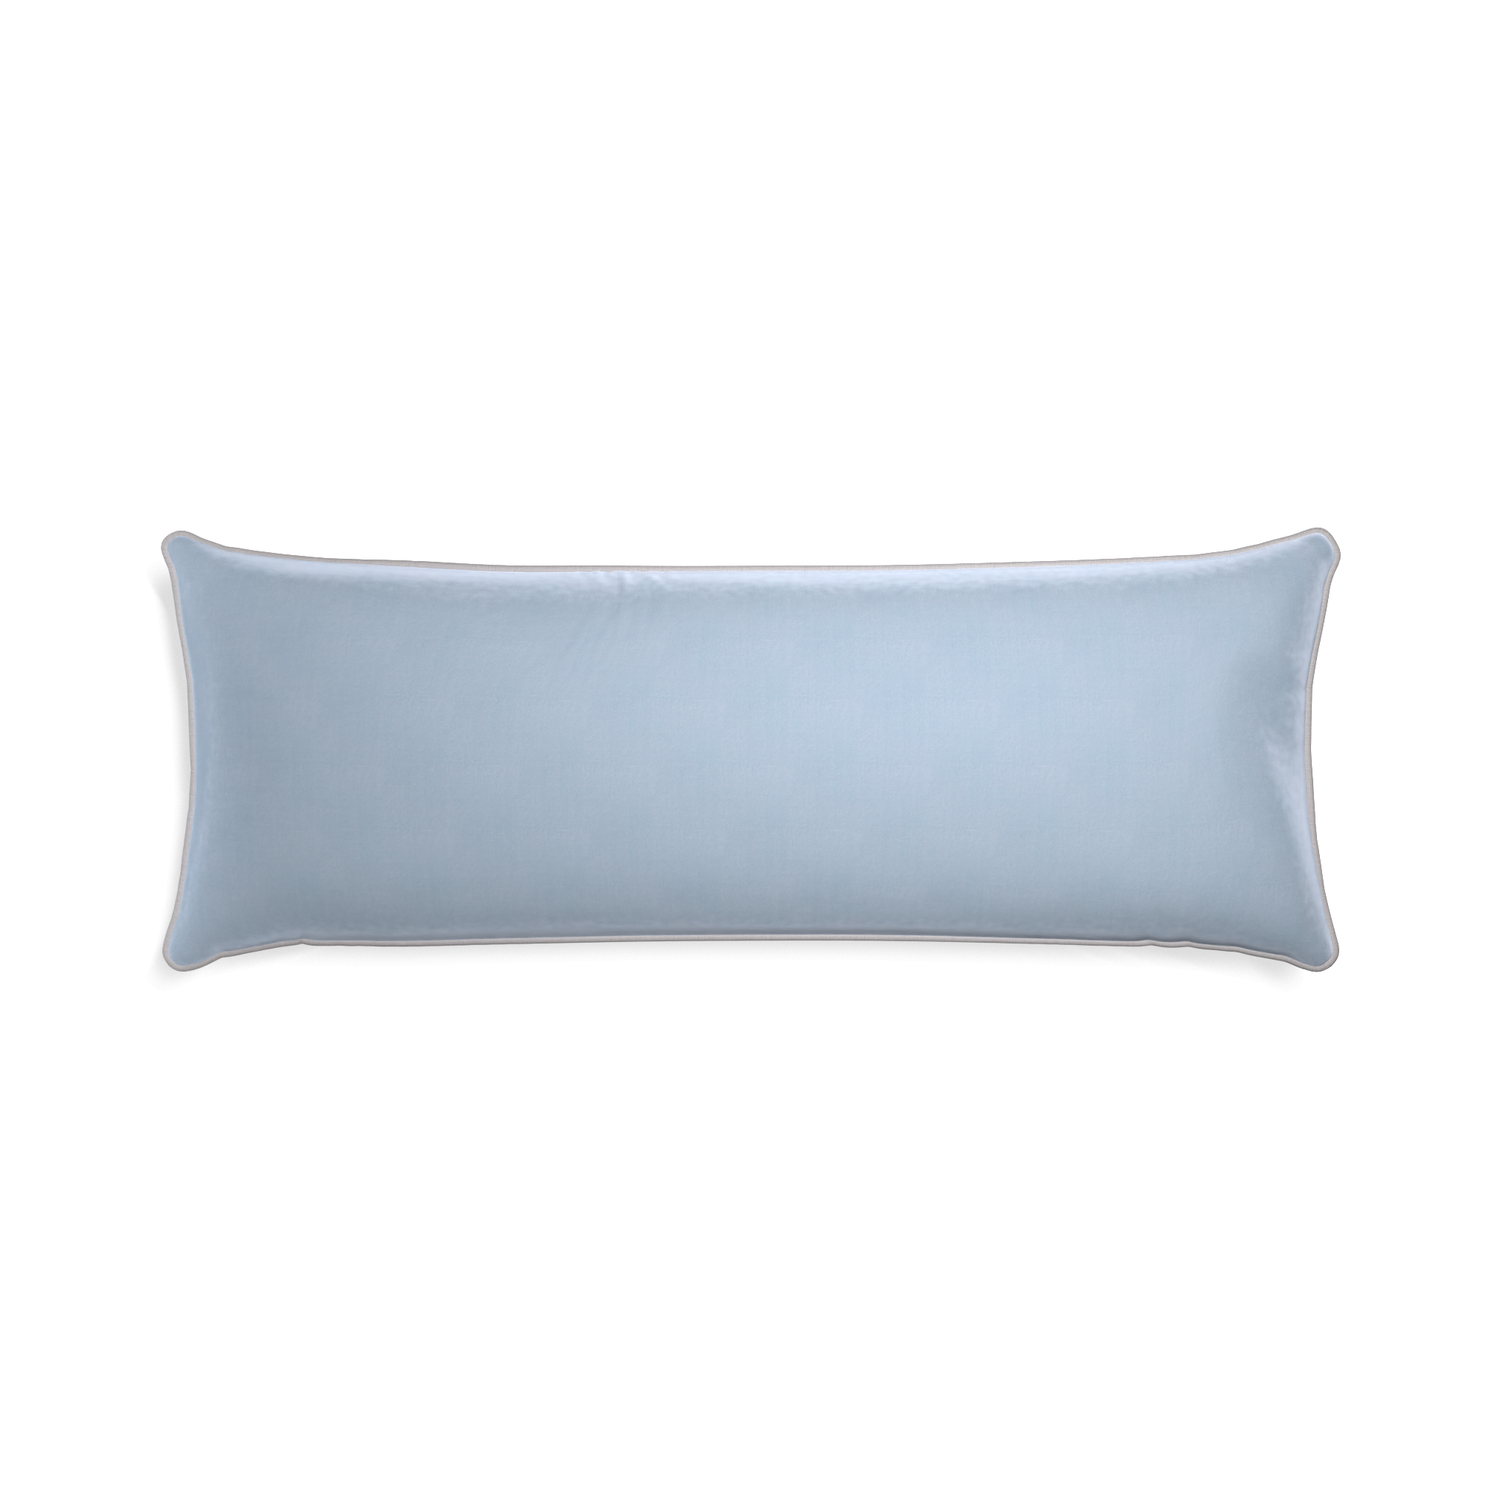 Xl-lumbar sky velvet custom pillow with pebble piping on white background